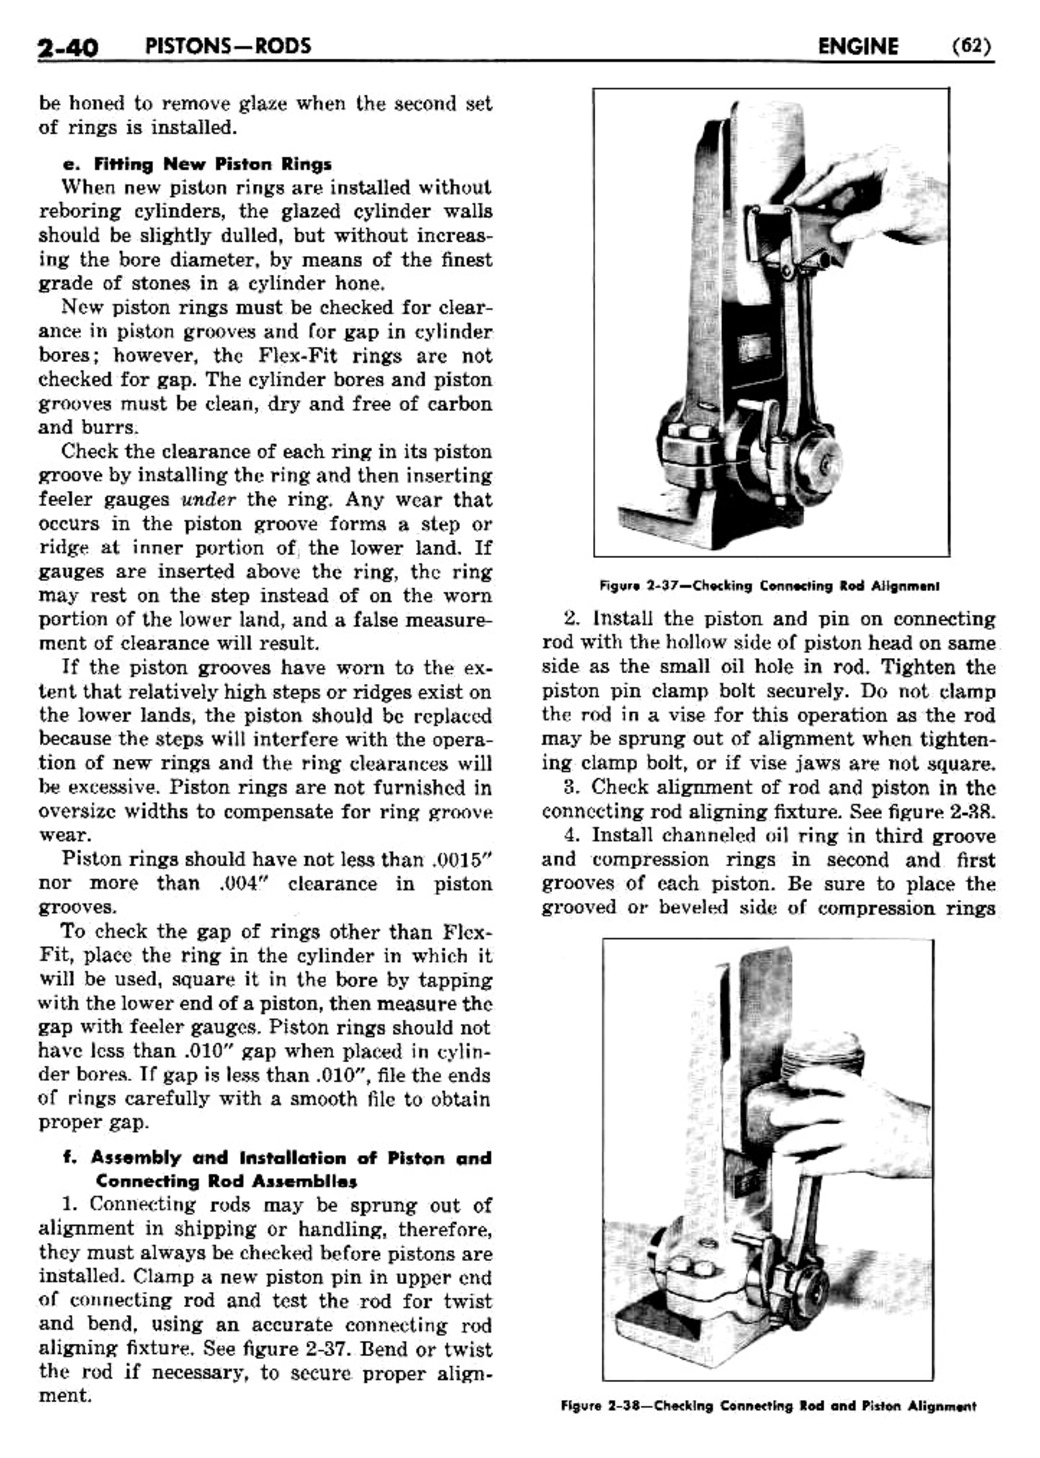 n_03 1948 Buick Shop Manual - Engine-040-040.jpg